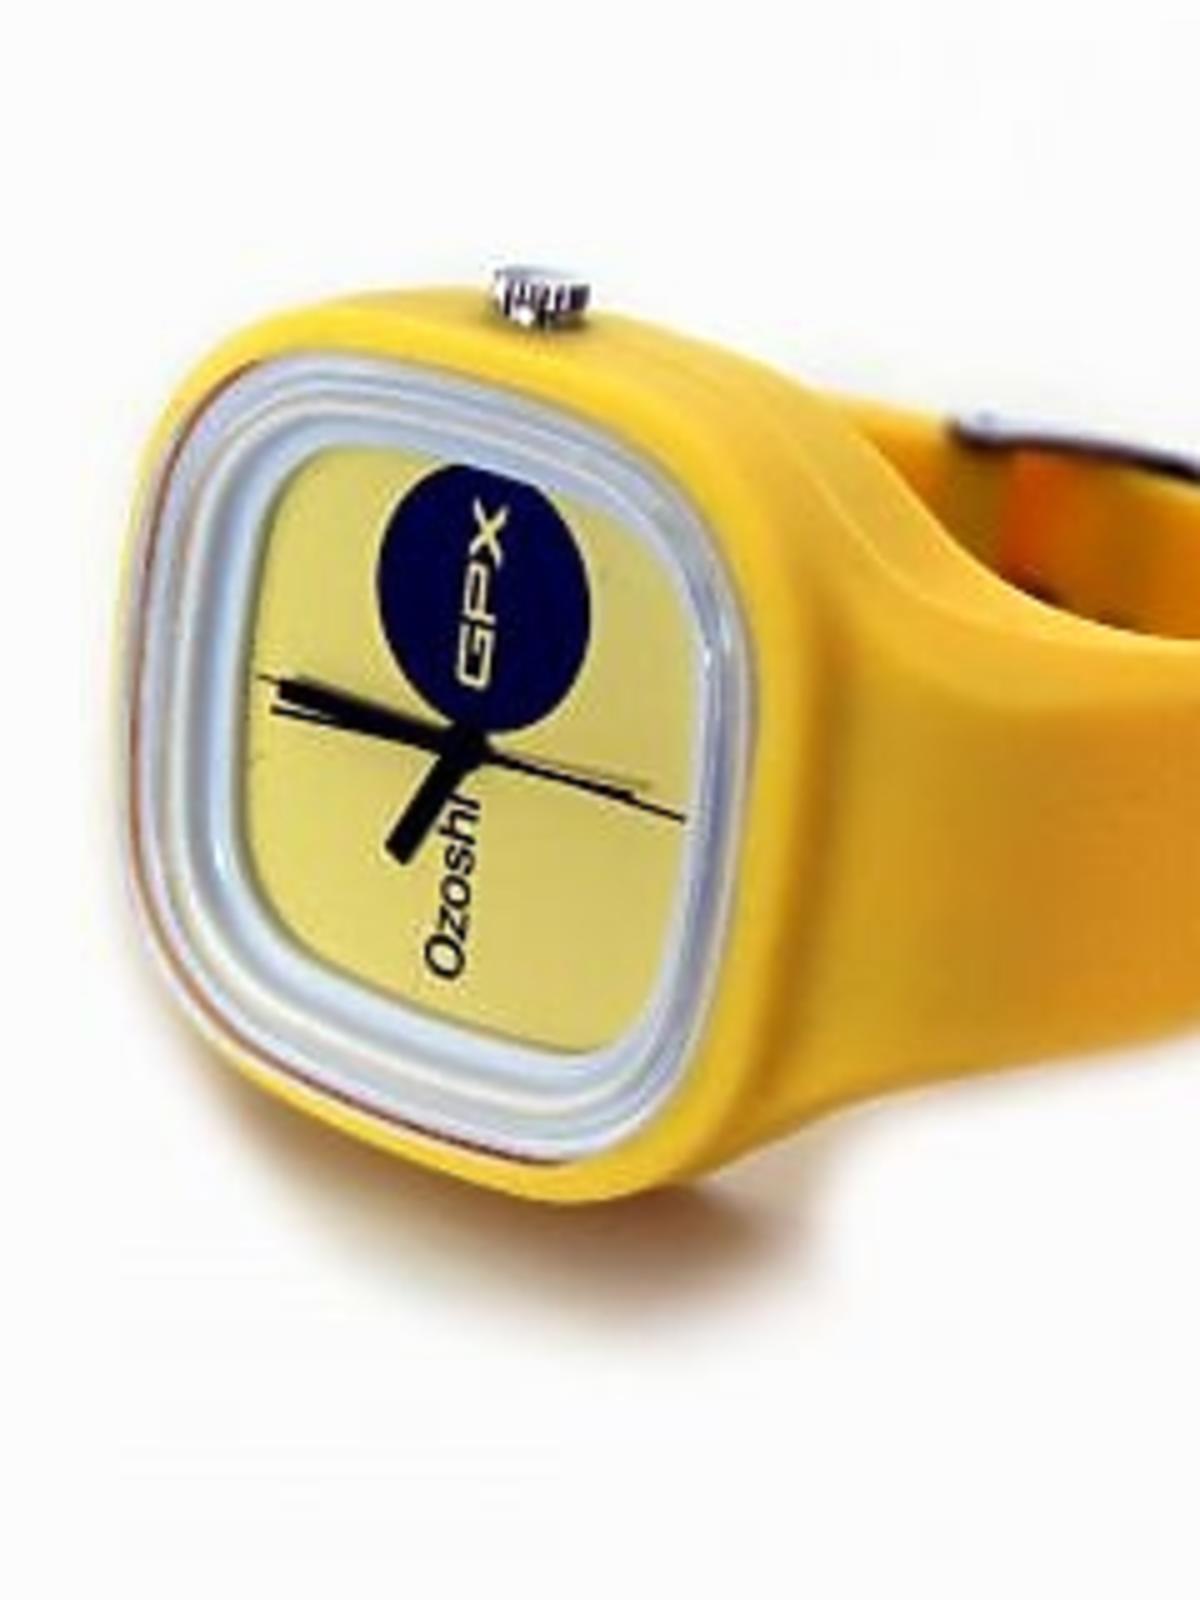 1291-gpx-watch-yellow-medium.jpg